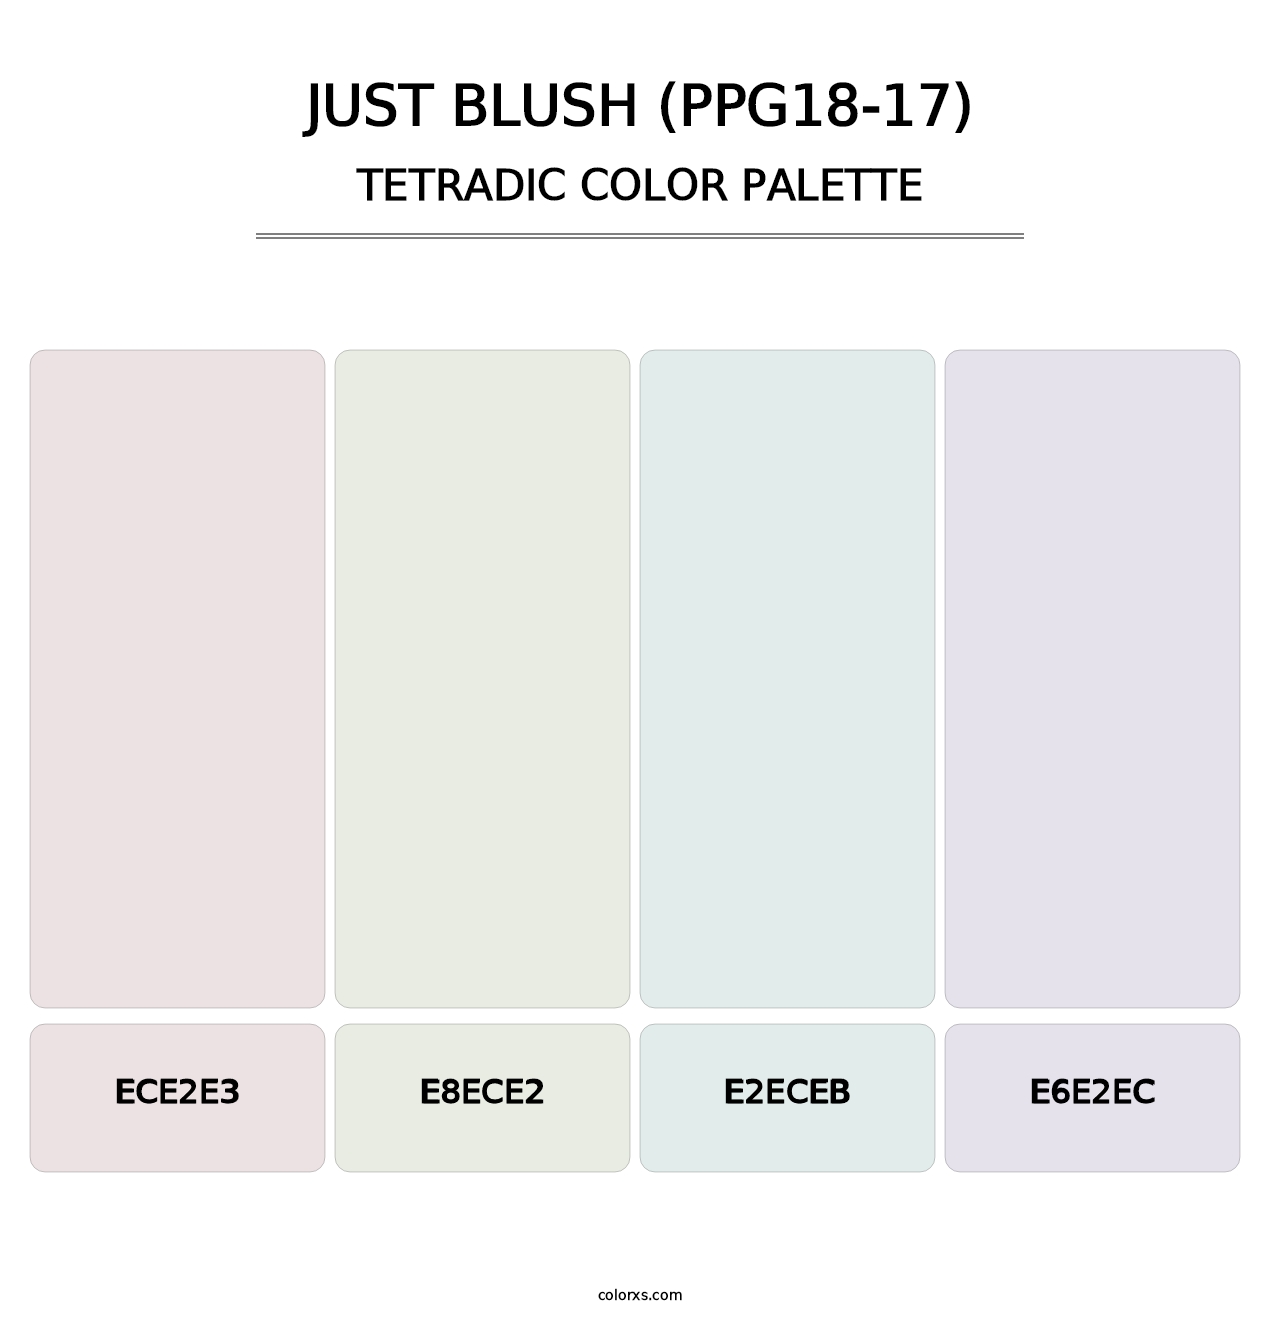 Just Blush (PPG18-17) - Tetradic Color Palette